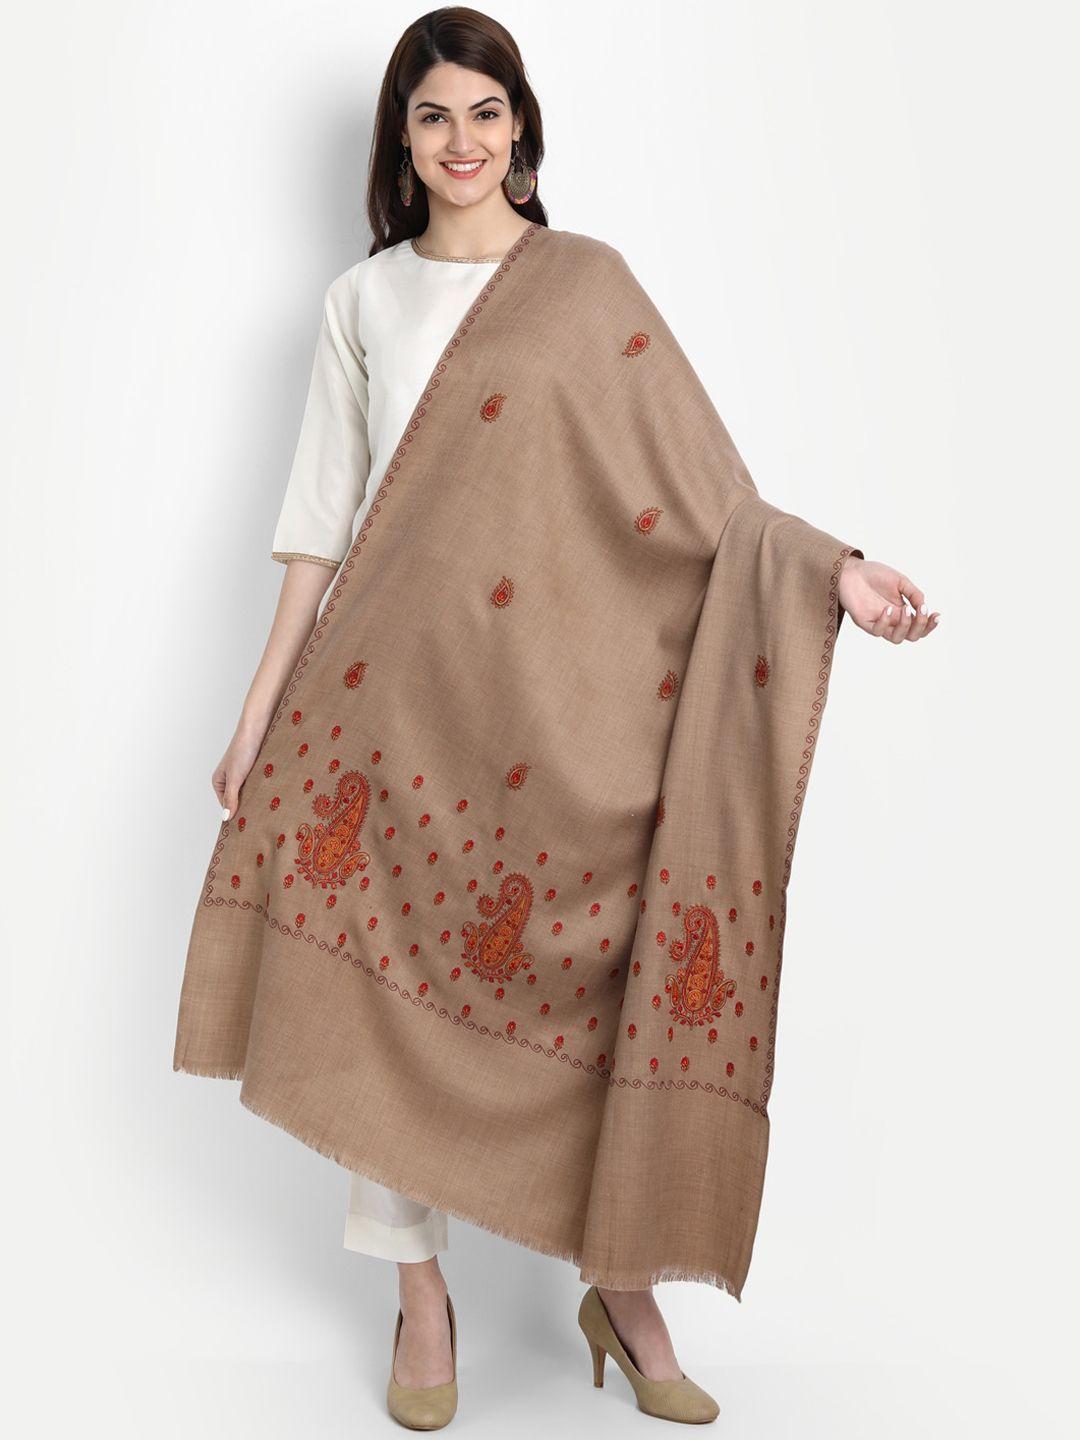 zamour women brown sozni embroidered shawl